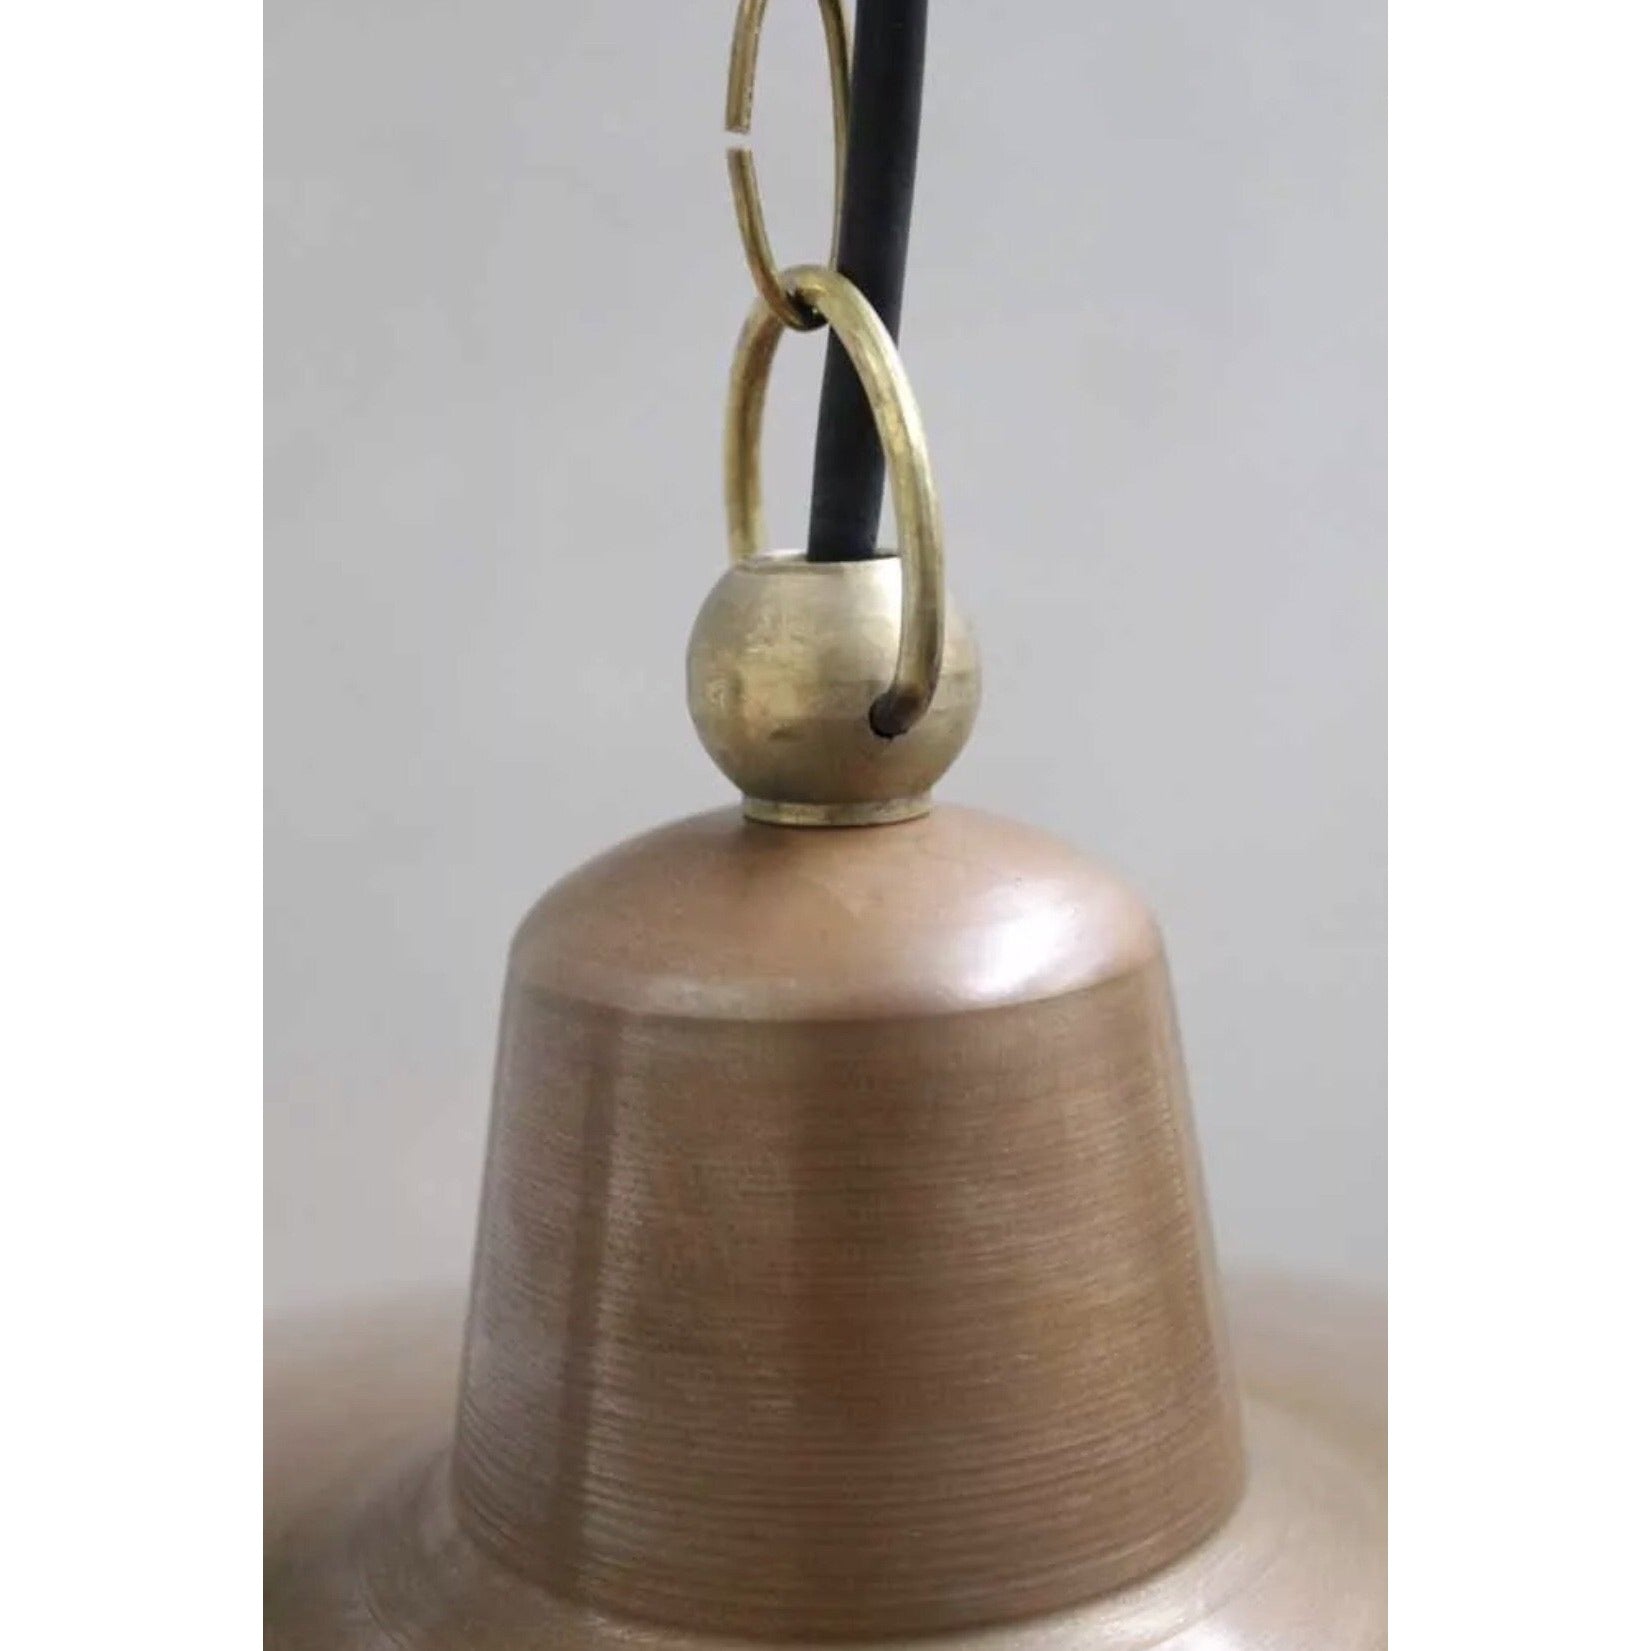 Copper &amp; Brass Pendant Light | Lighting, Decor, Luxury Lighting, Modern Lights, Interior Lighting and More | The Light House Noosa